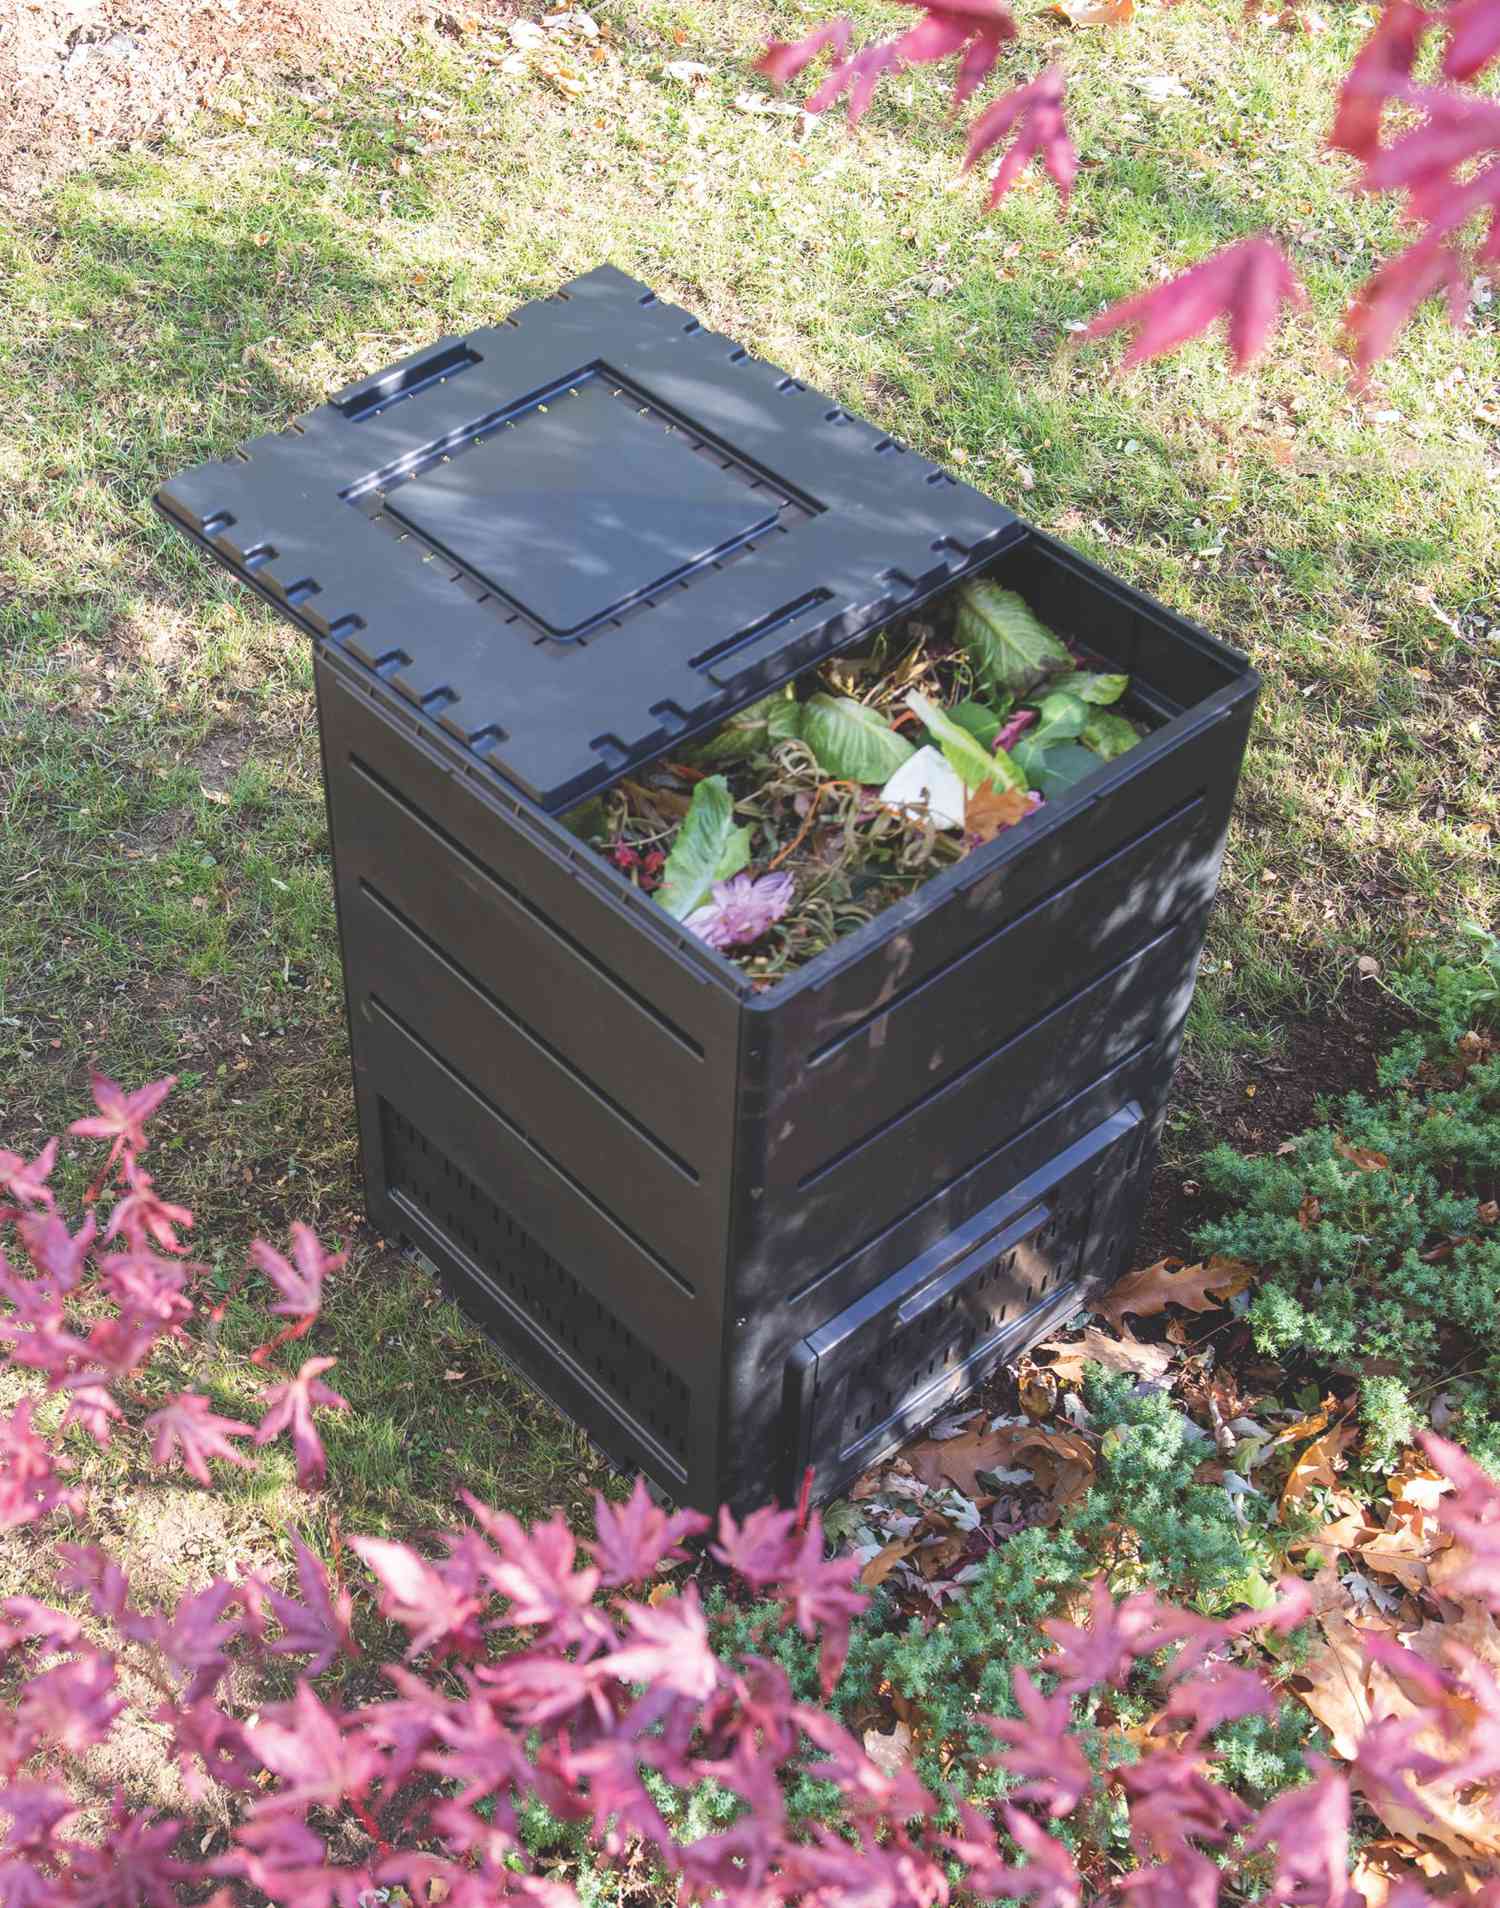 Black compost bin from Gardener's Supply Company